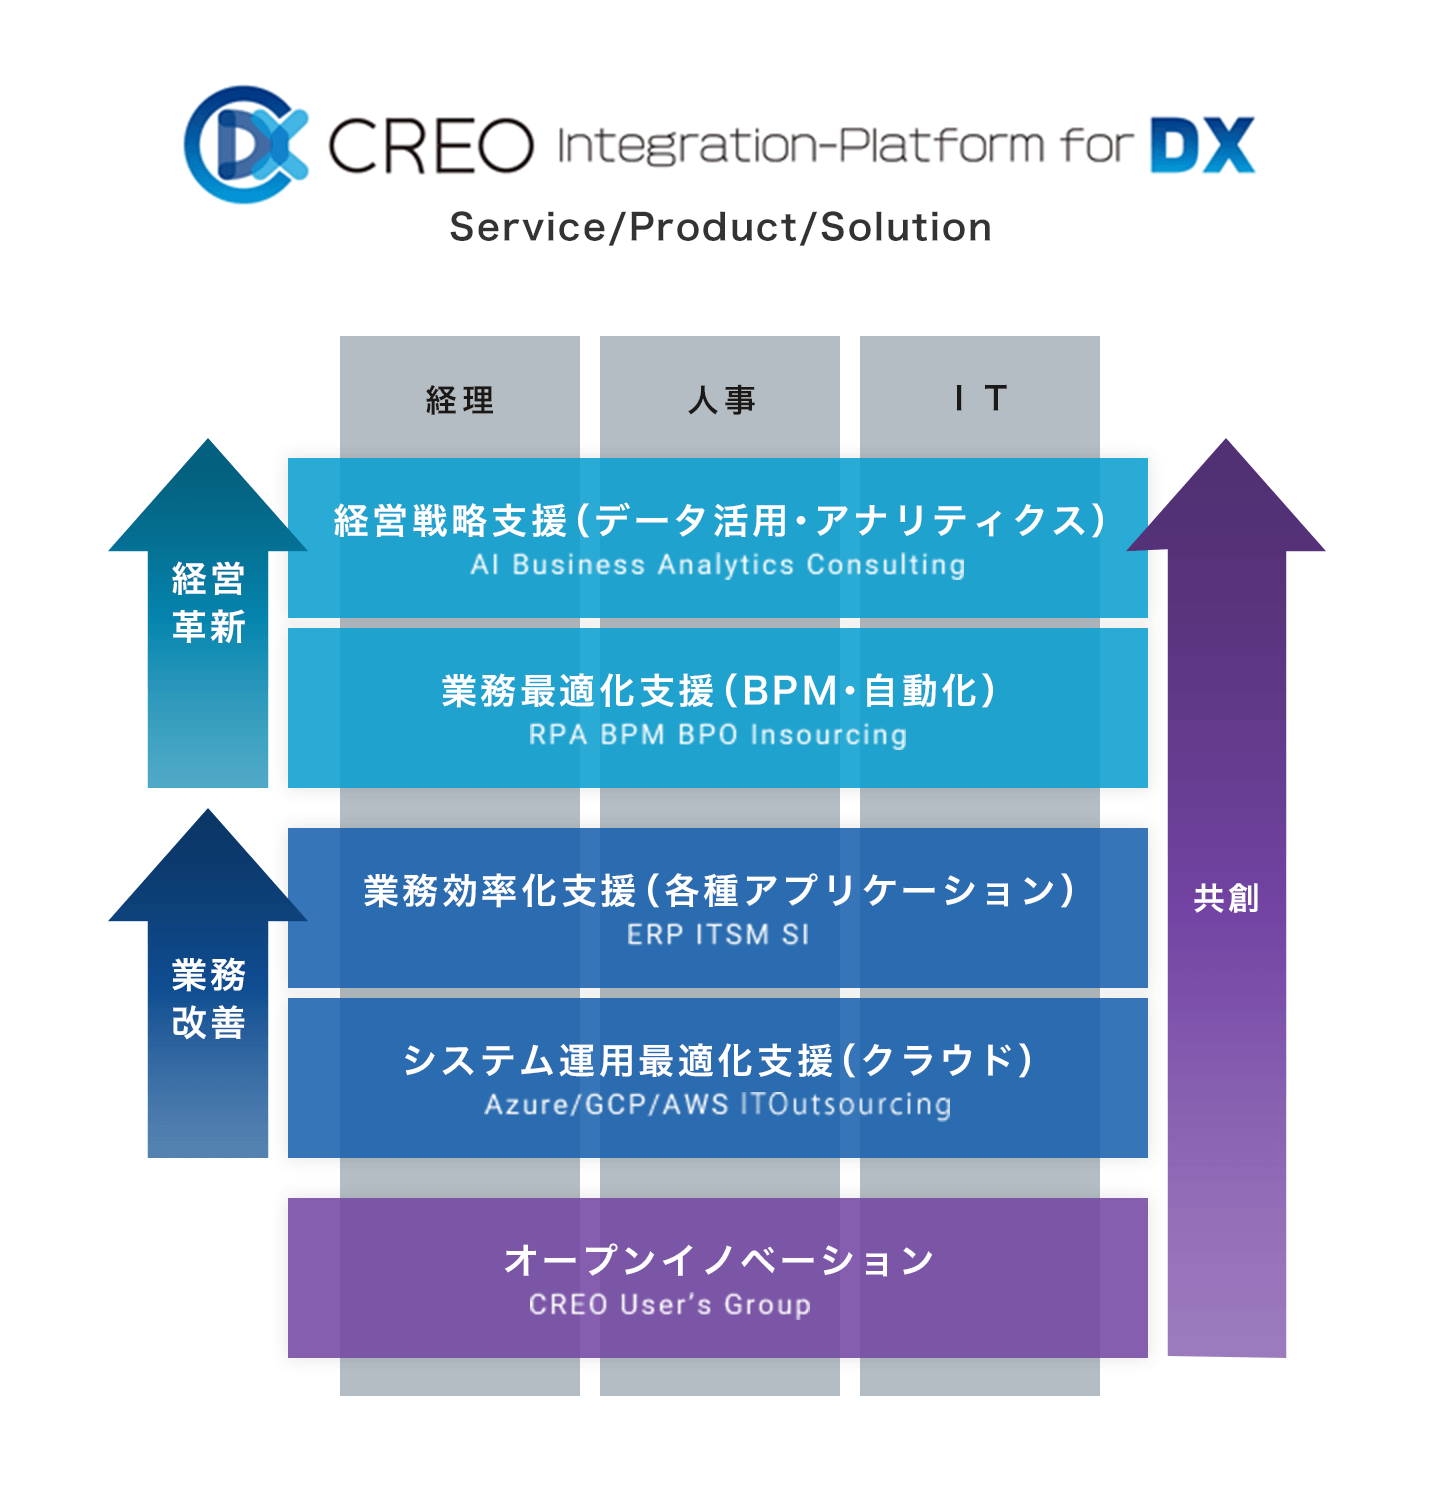 CREO Integration-Platform for DX